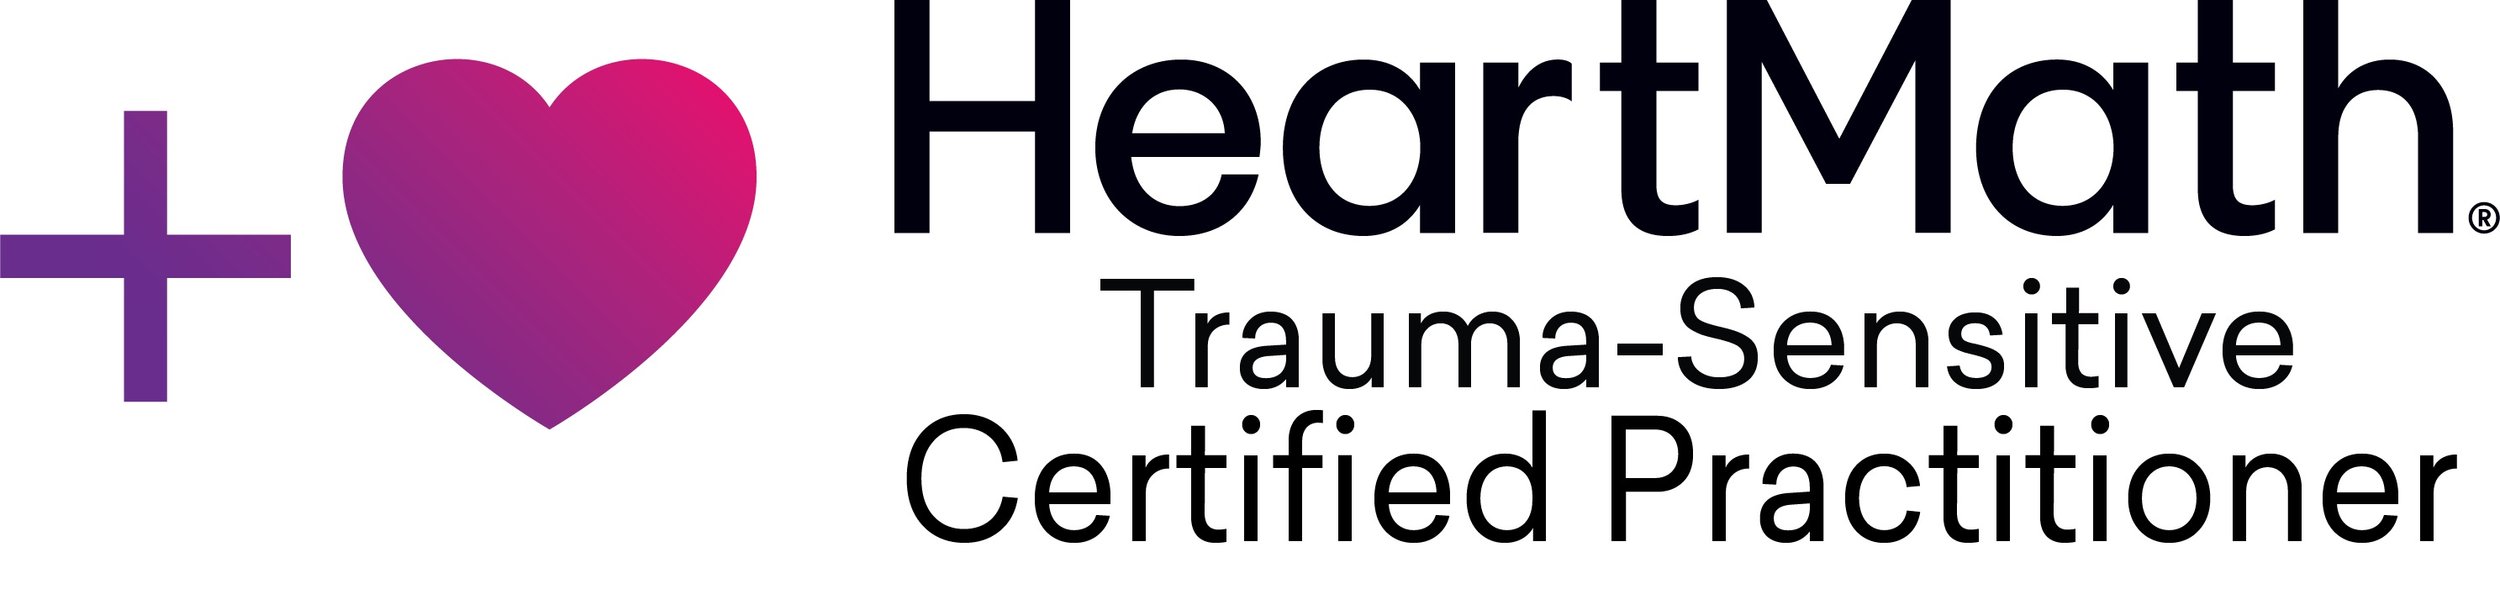 TRH Trauma Sensitive Logo.jpg